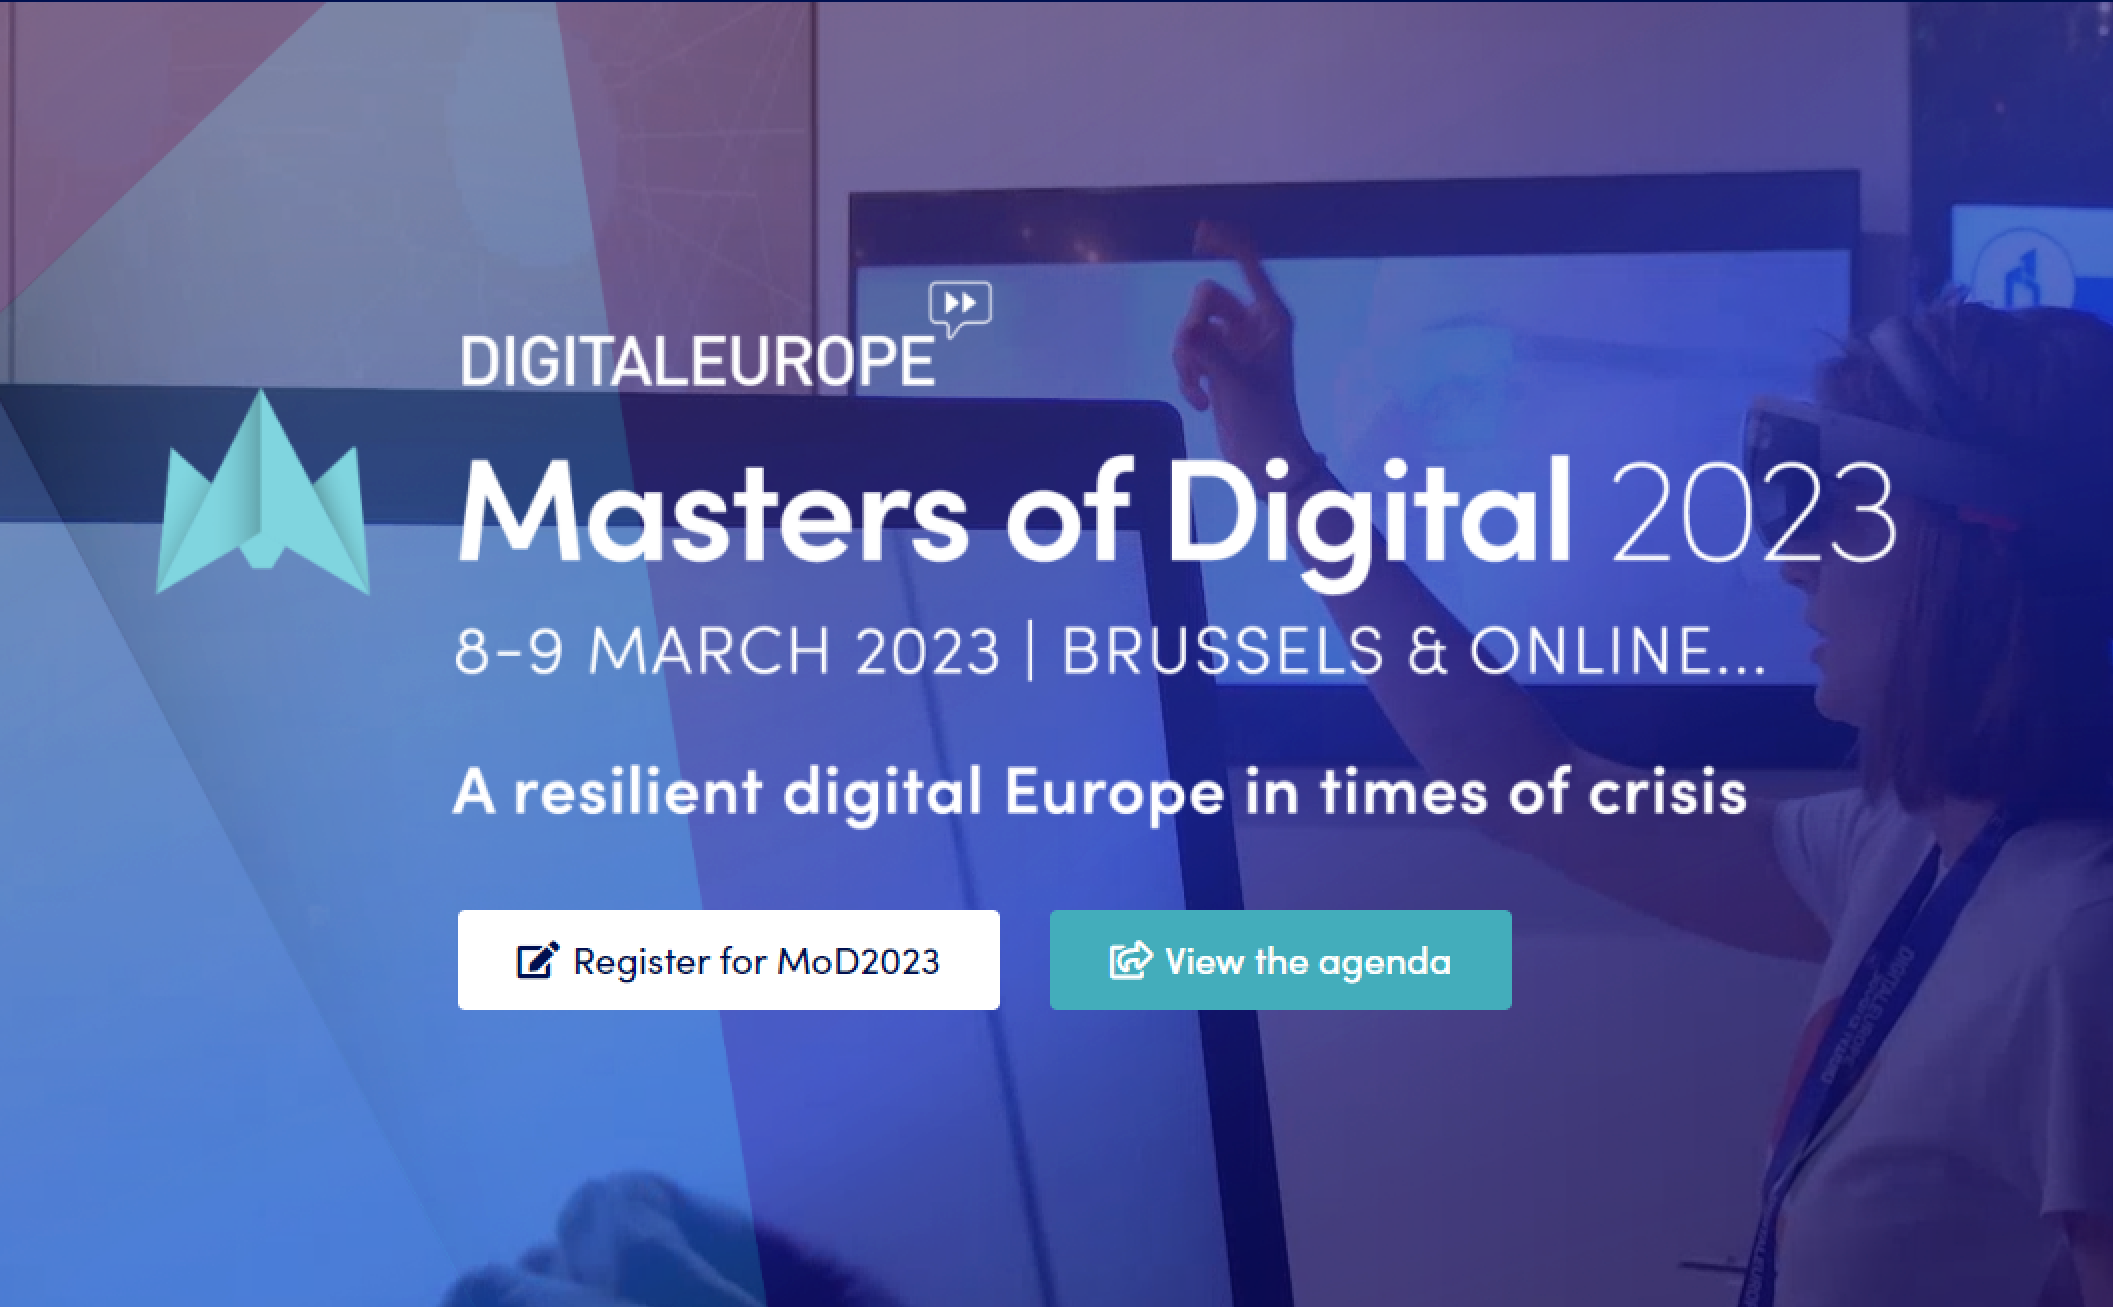 Masters of Digital 2024